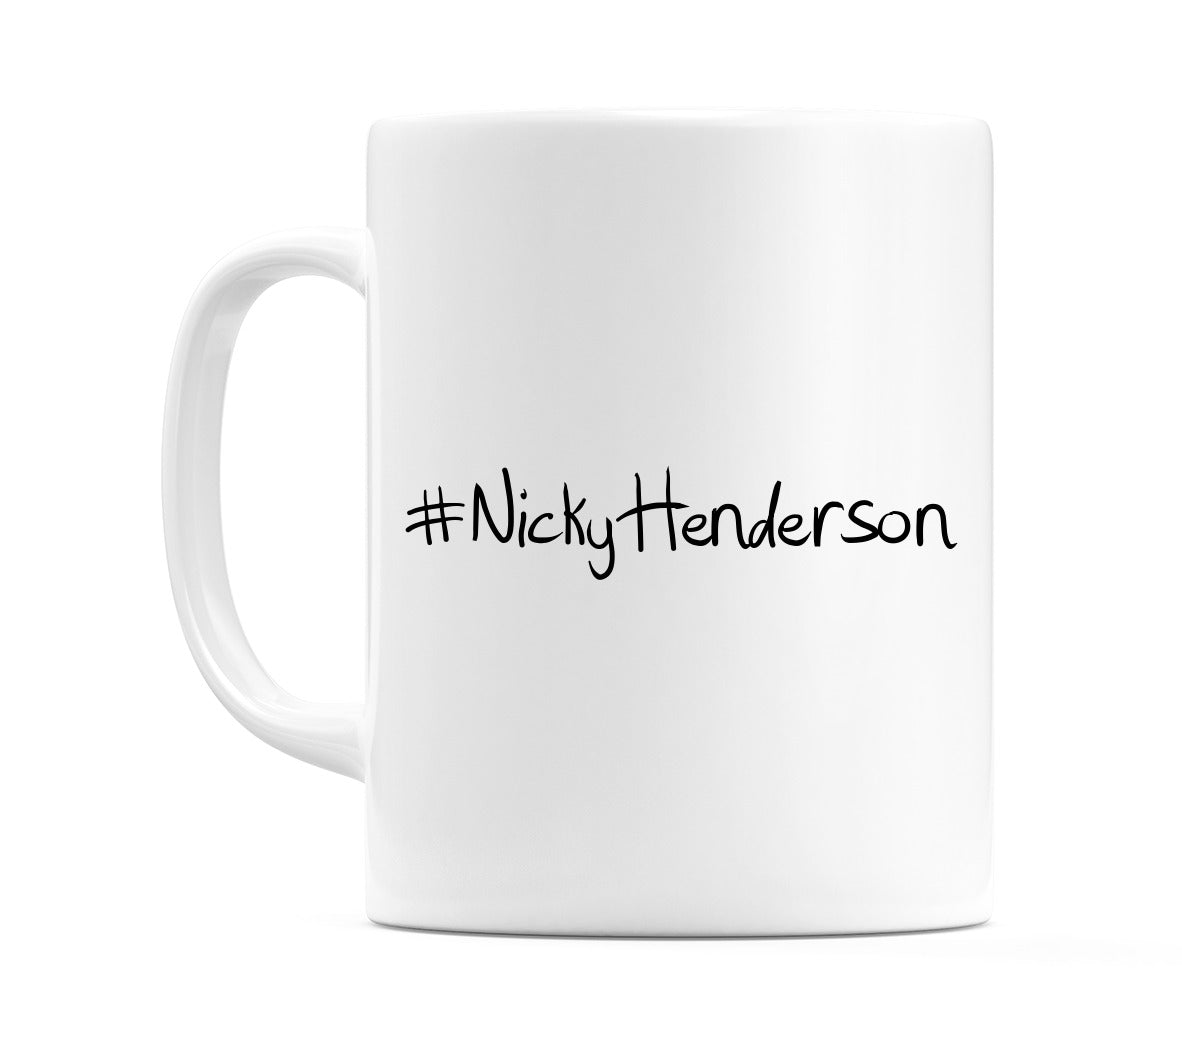 #NickyHenderson Mug